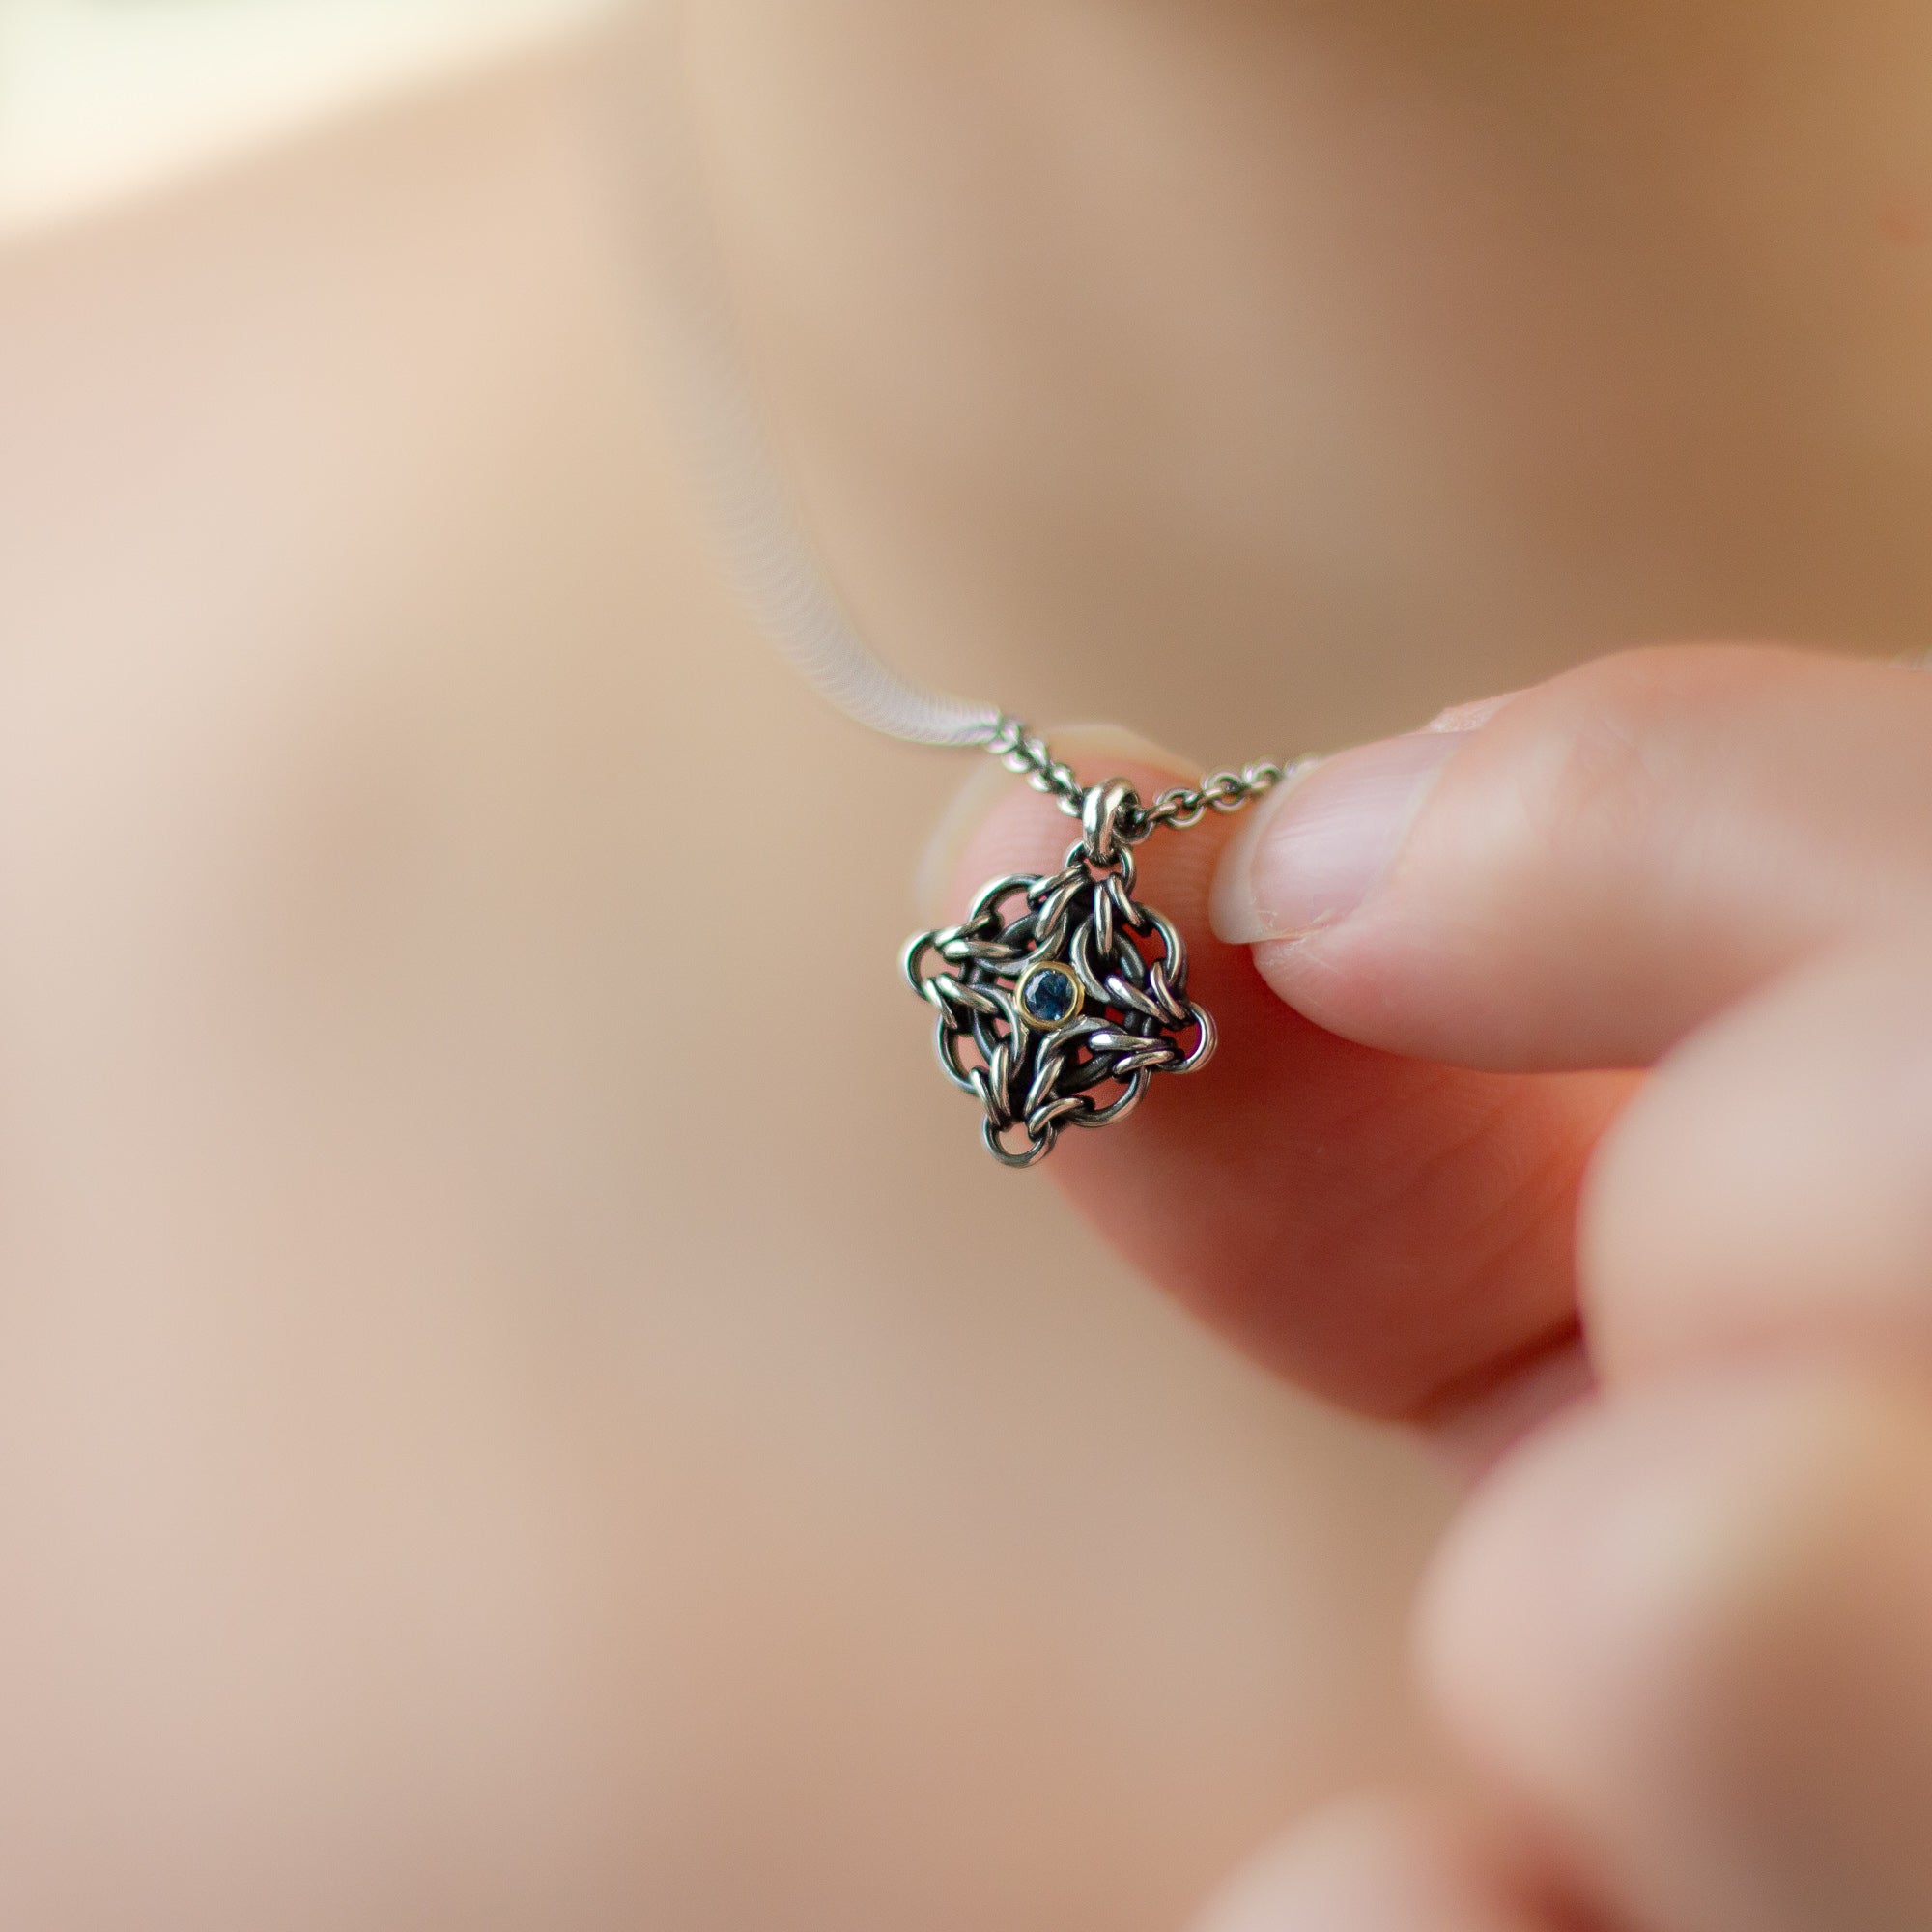 Petite Celestial Pendant Necklace w/ Gemstone - Femailler